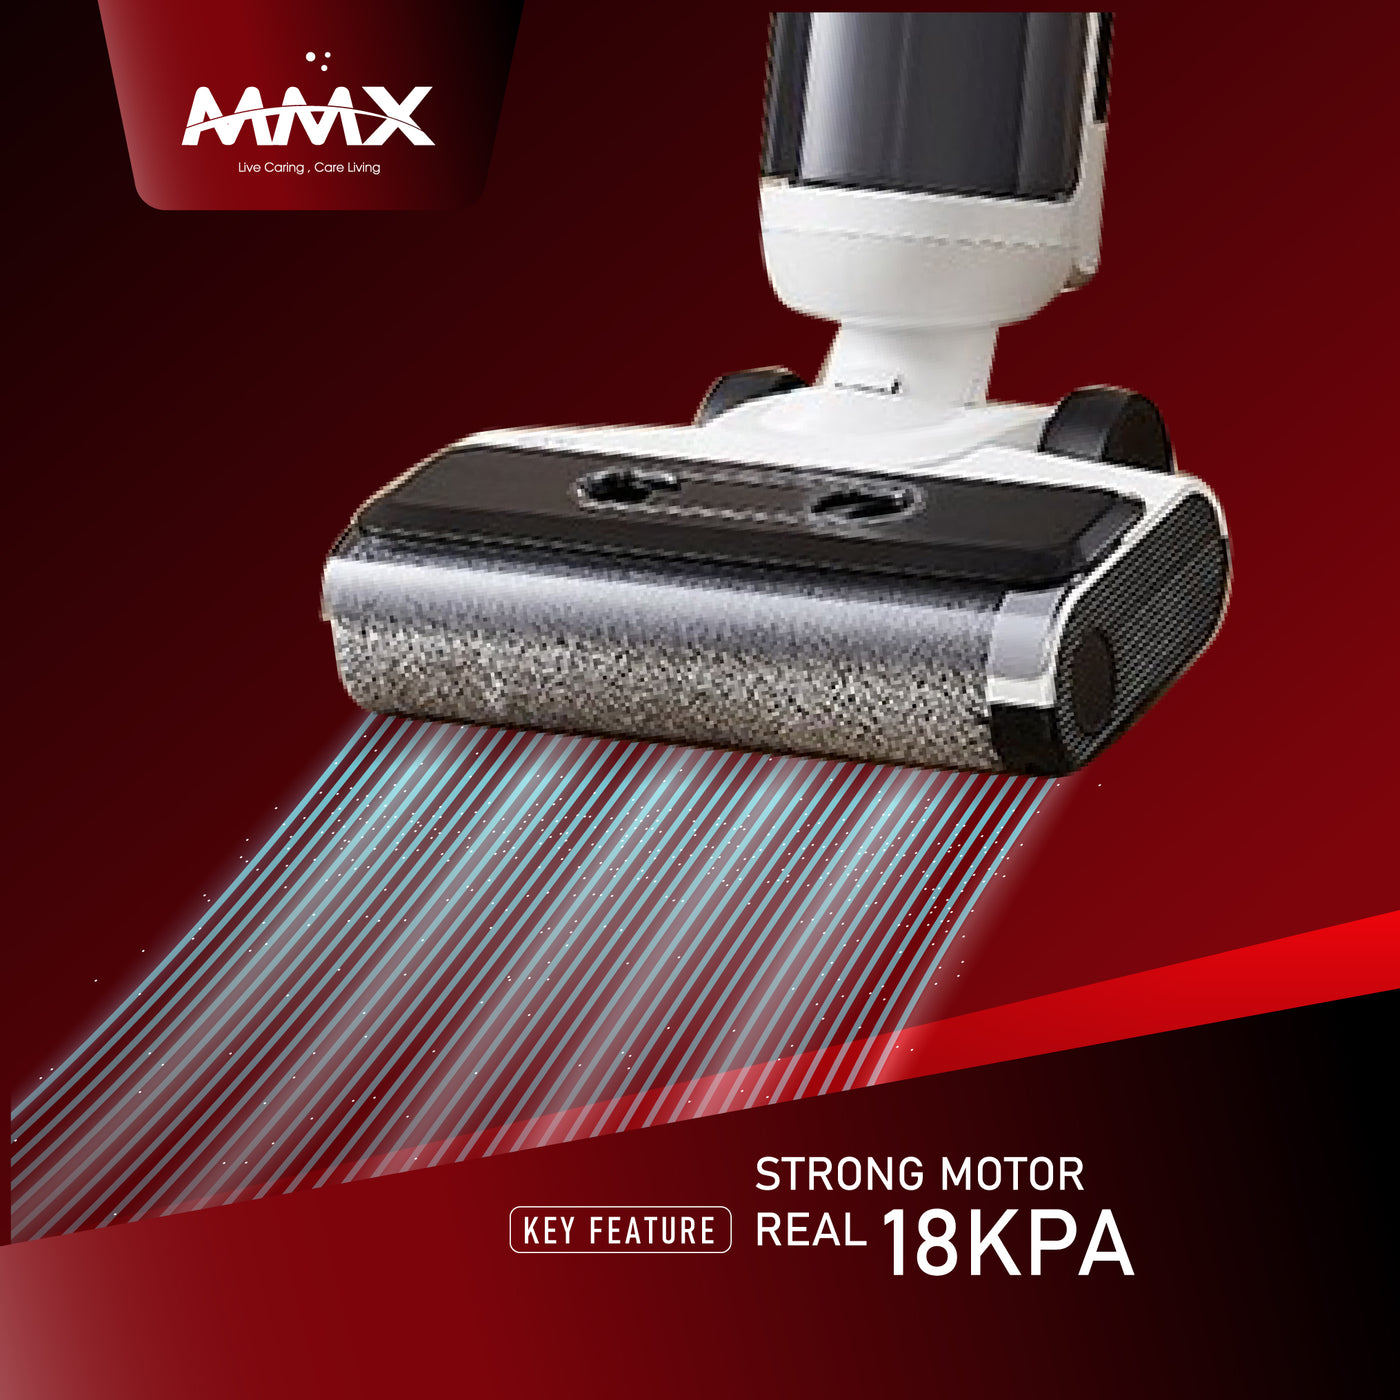 Aero Max iPro S878+ Smart MMXMALL Dry IPX4 Cordless Wet Washer – Floor 